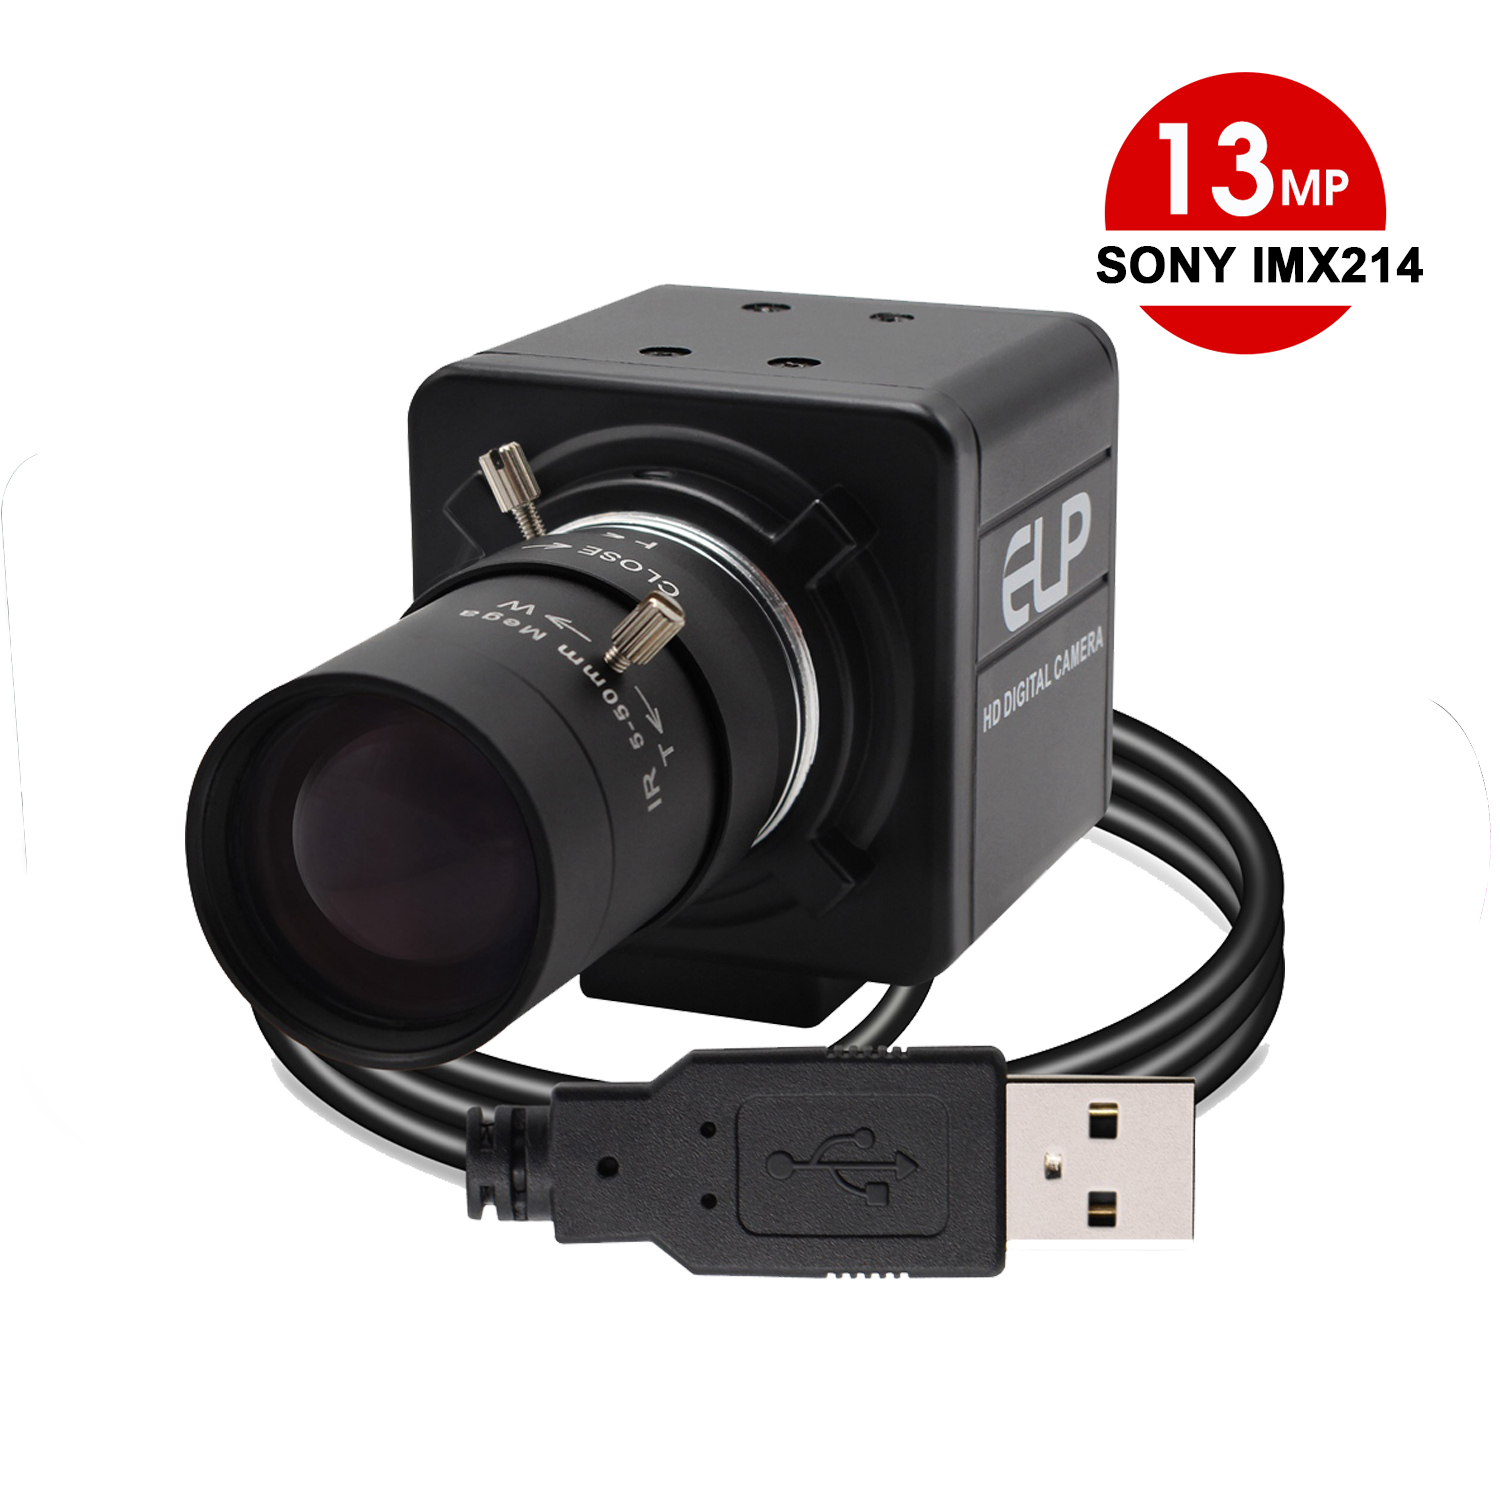 ELP 13 MP SONY IMX214 3840*2880 5-50mm Varifocal Lens 4K USB Camera Module MJPEG YUYV UVC Webcam for Android Linux Windows MAC OS